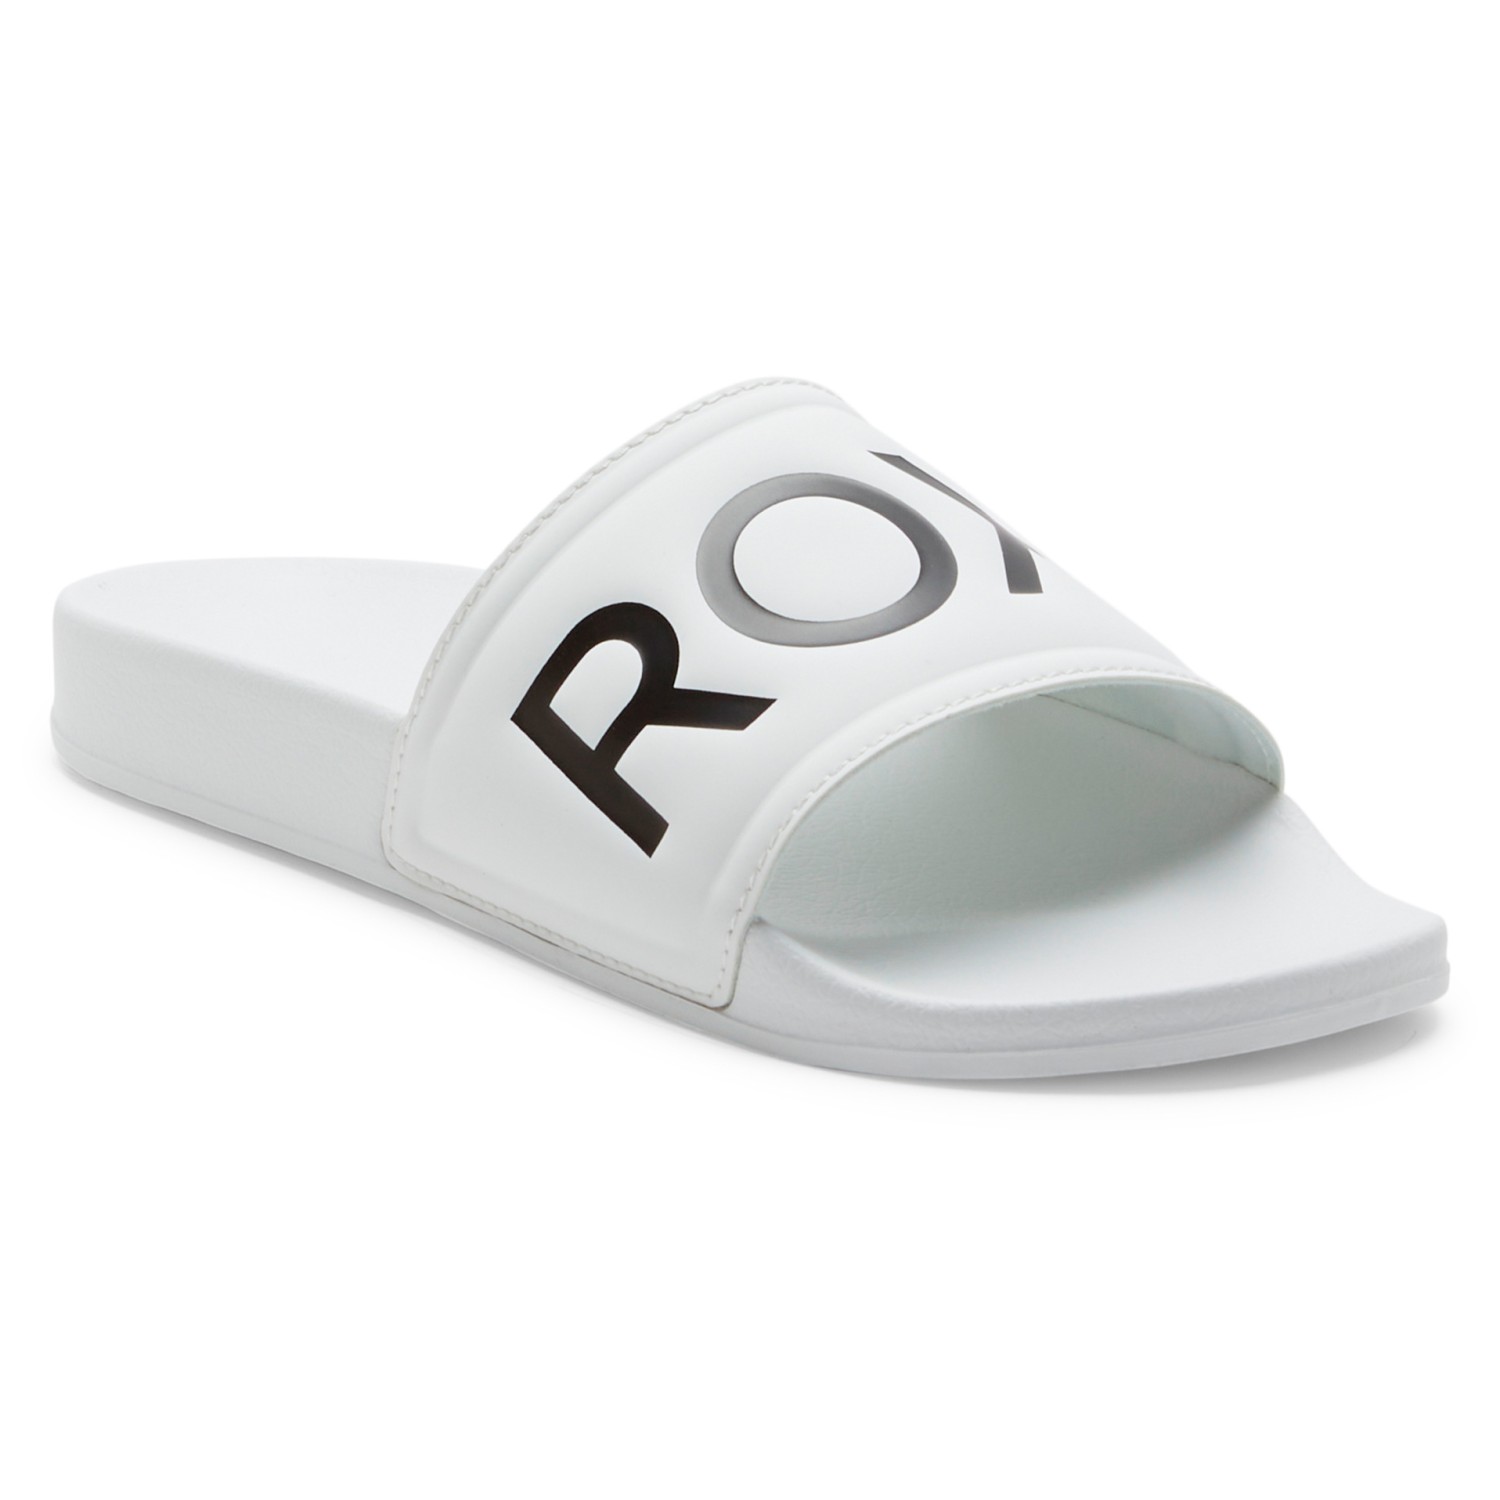 Сандалии Roxy Women's Slippy Sandals, цвет White/Black Basic сандалии женские 965 black 37 23 см